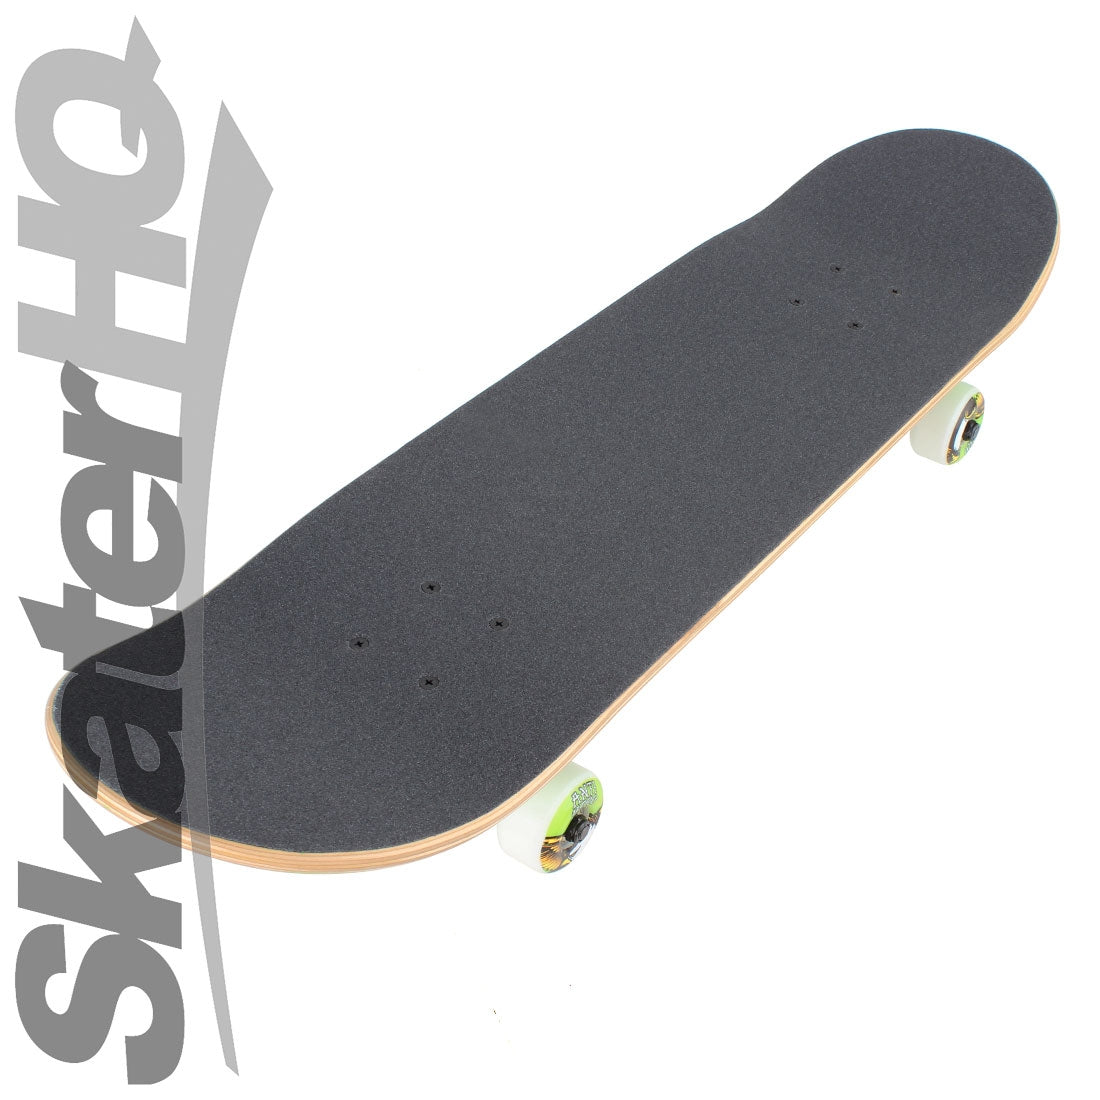 Antihero Classic Eagle 7.75 Complete Skateboard Completes Modern Street